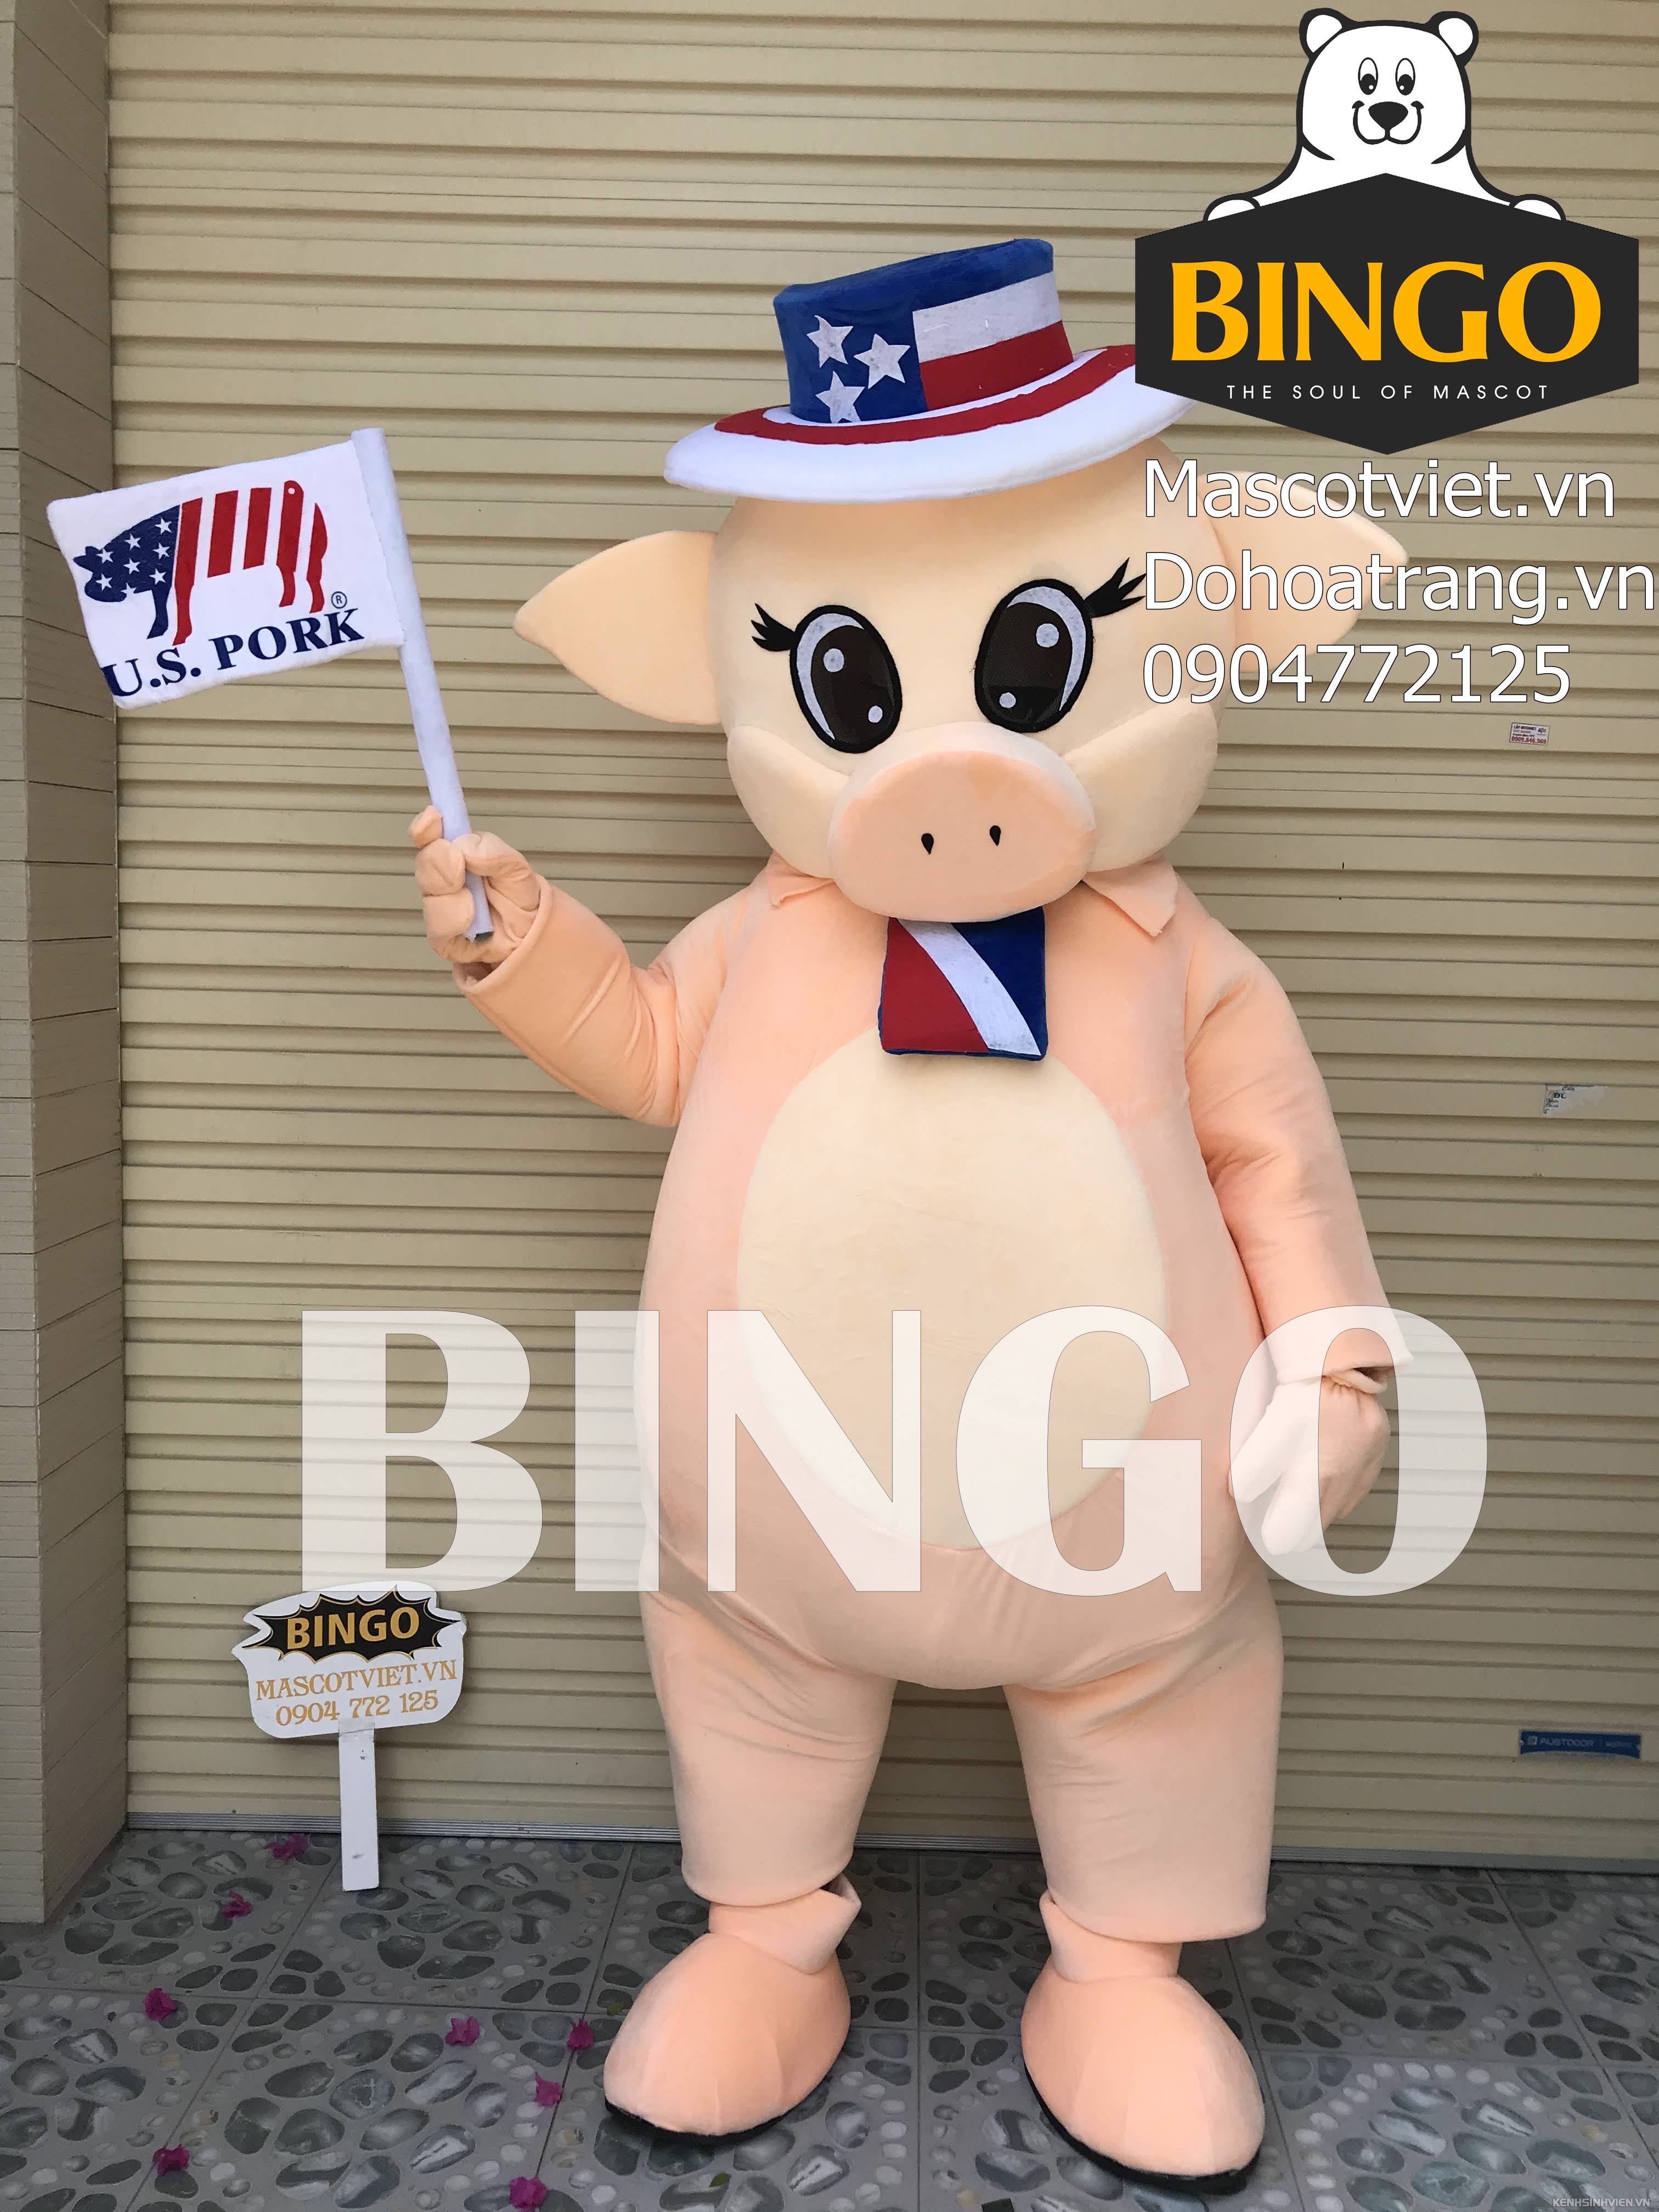 mascot-con-heo-us-pork-bingo-costumes-0904772125.jpg